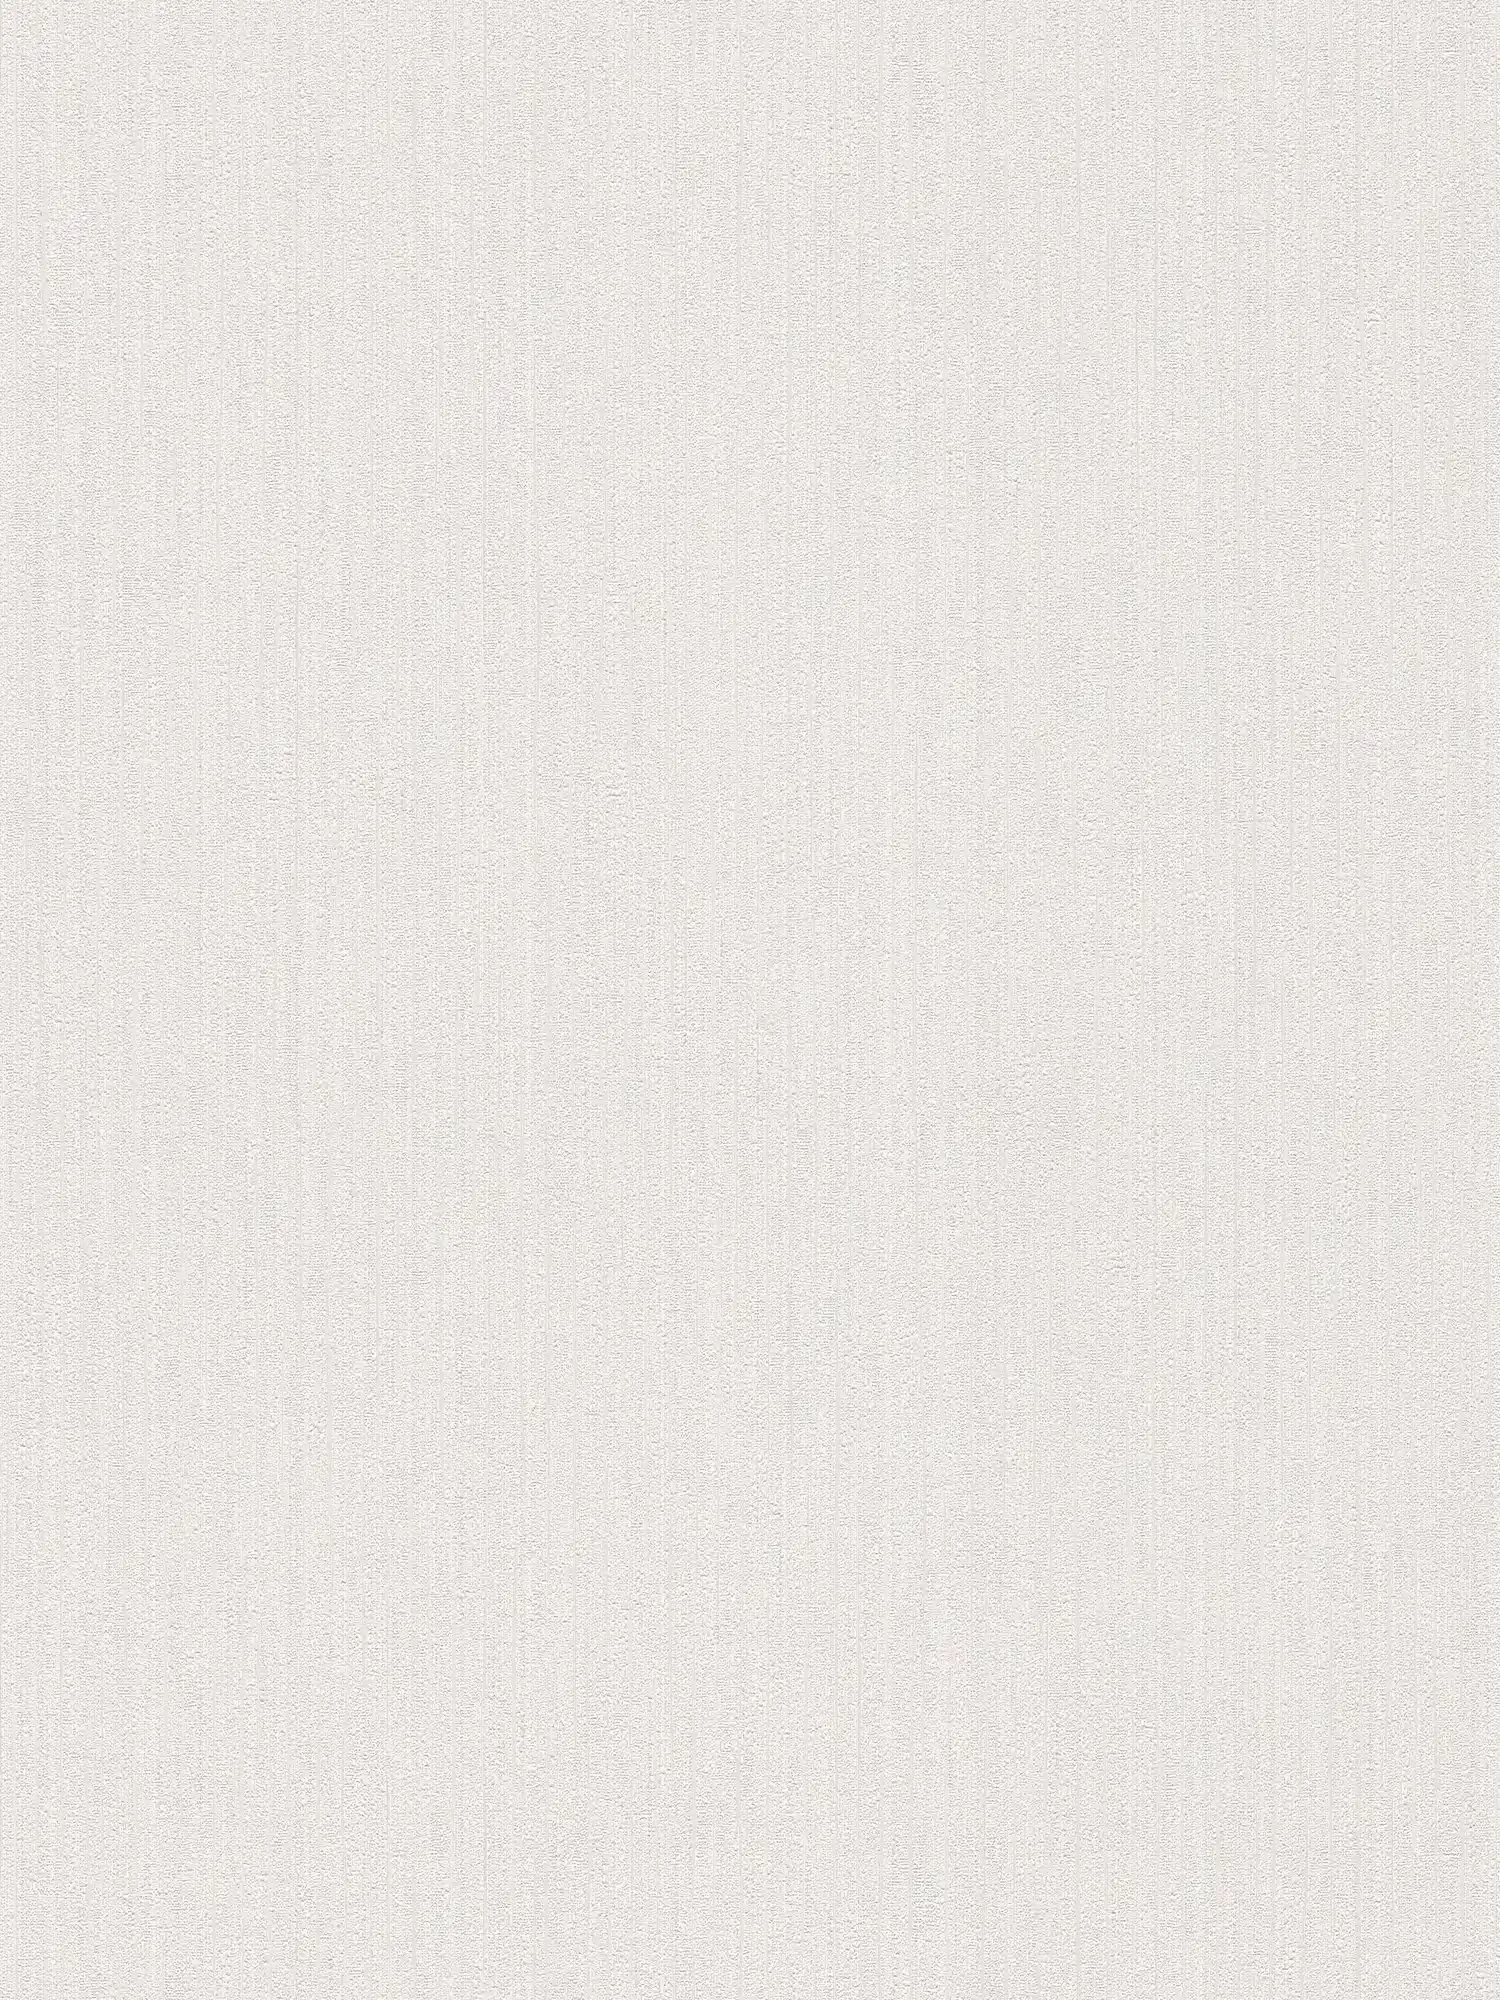 Carta da parati opaca in seta bianco panna con effetto texture naturale
